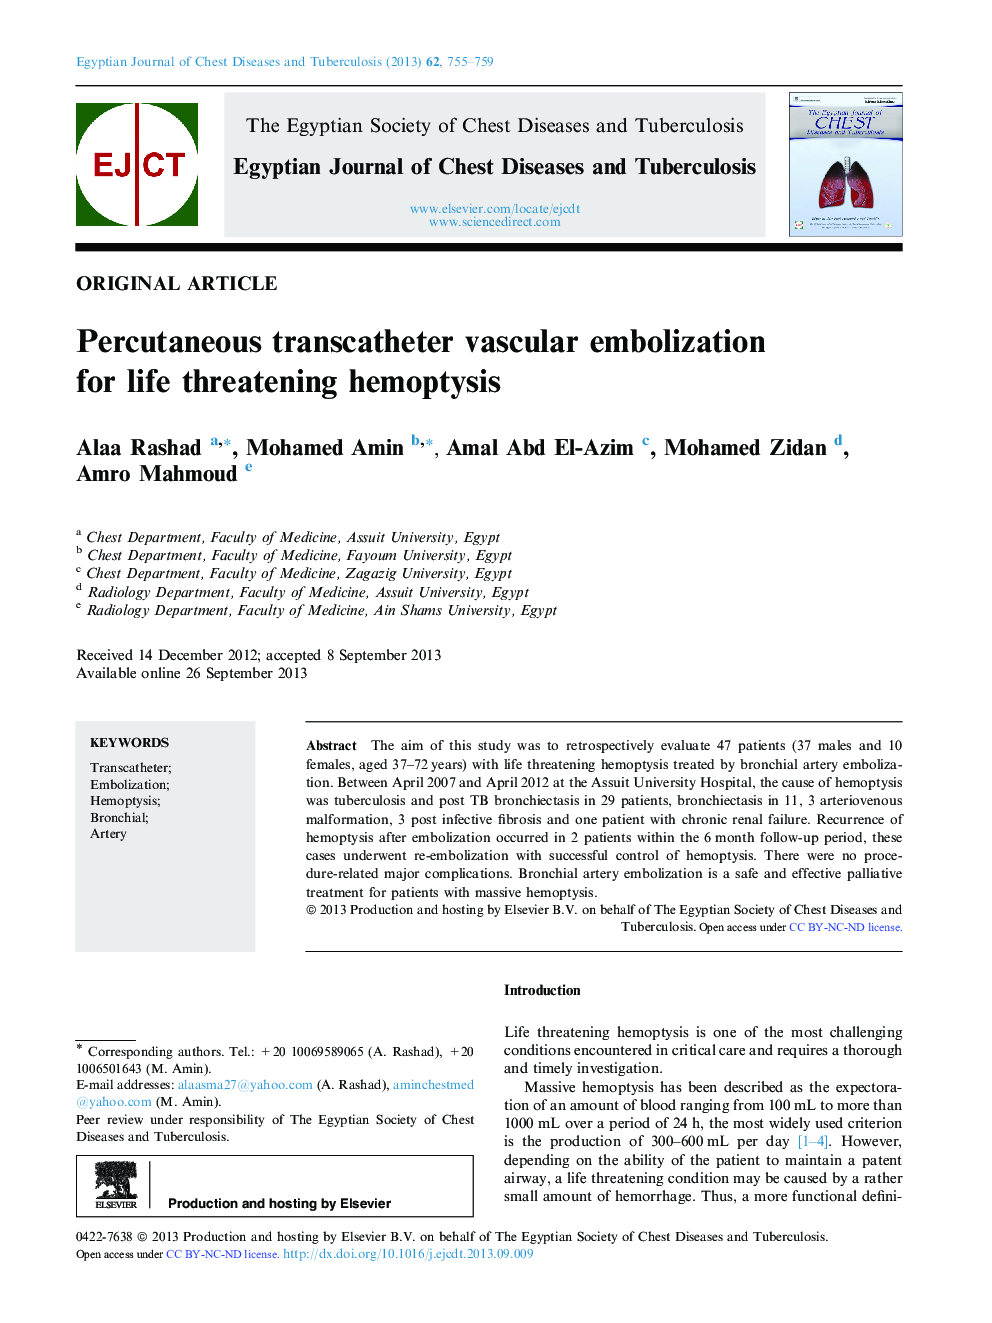 Percutaneous transcatheter vascular embolization for life threatening hemoptysis 